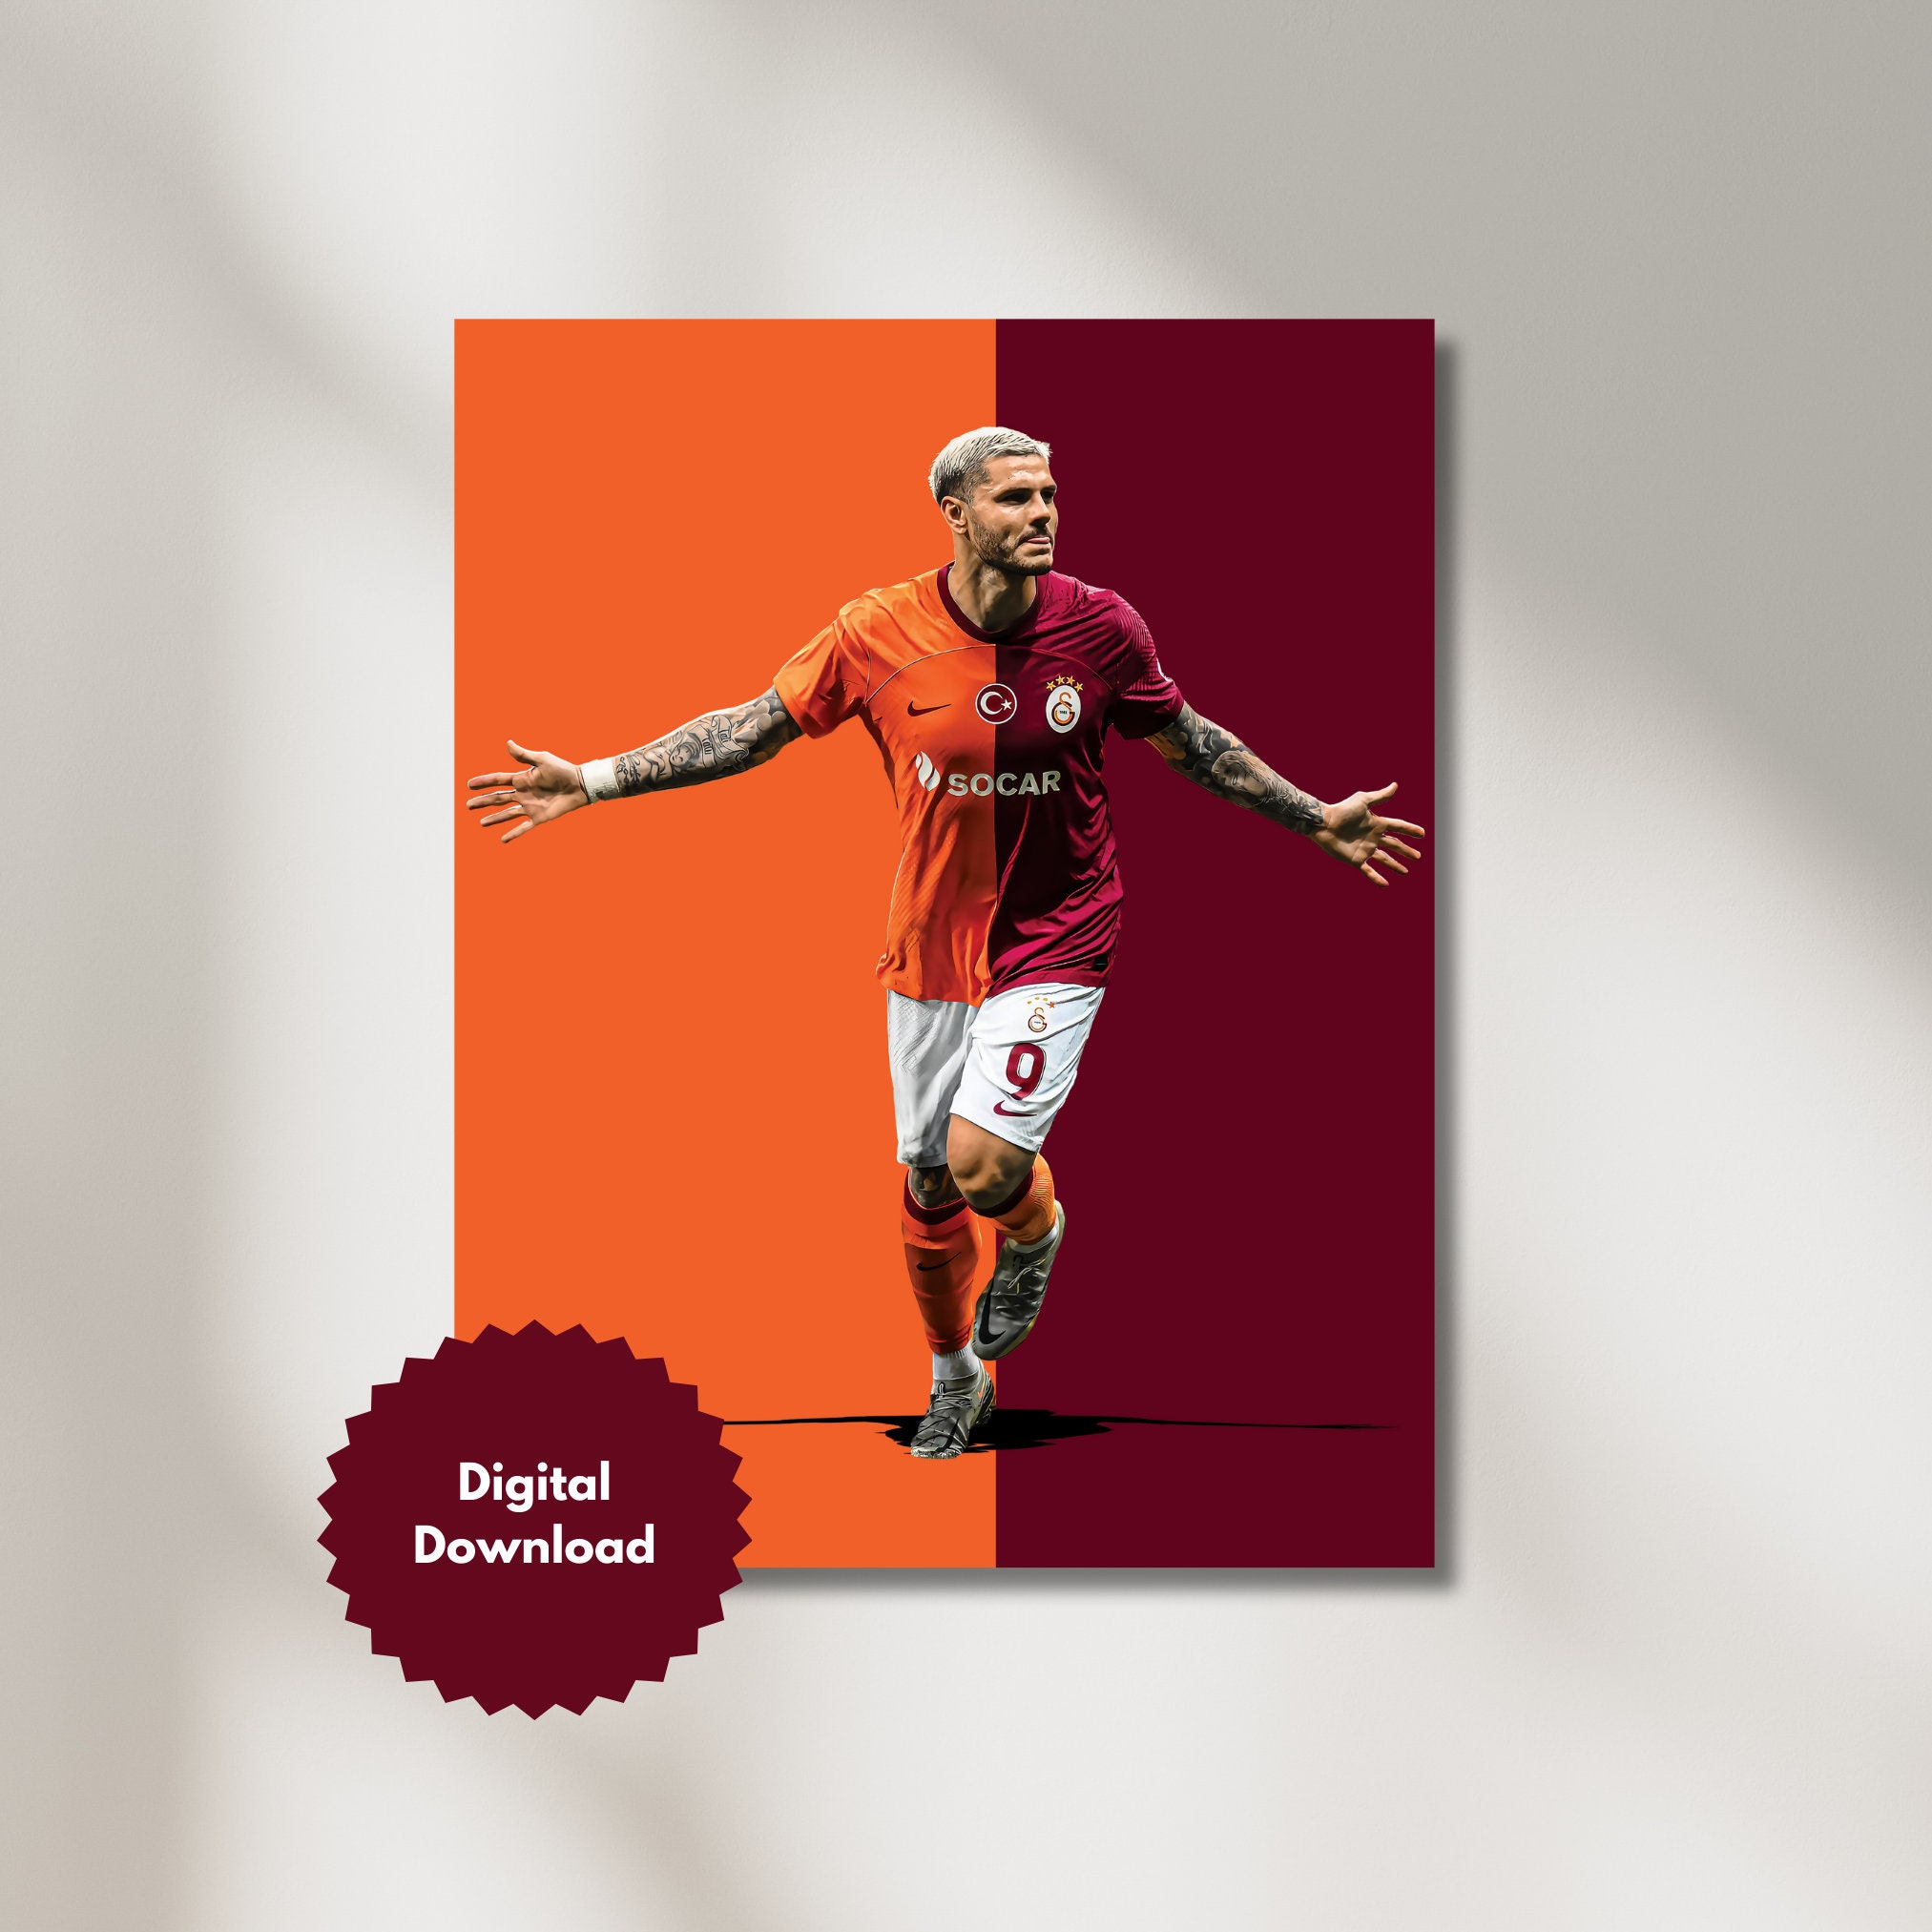 Mauro Icardi, Galatasaray, Football Print, Football Poster, Soccer Poster,  Gift, Decor, Instant Download DIGITAL DOWNLOAD 